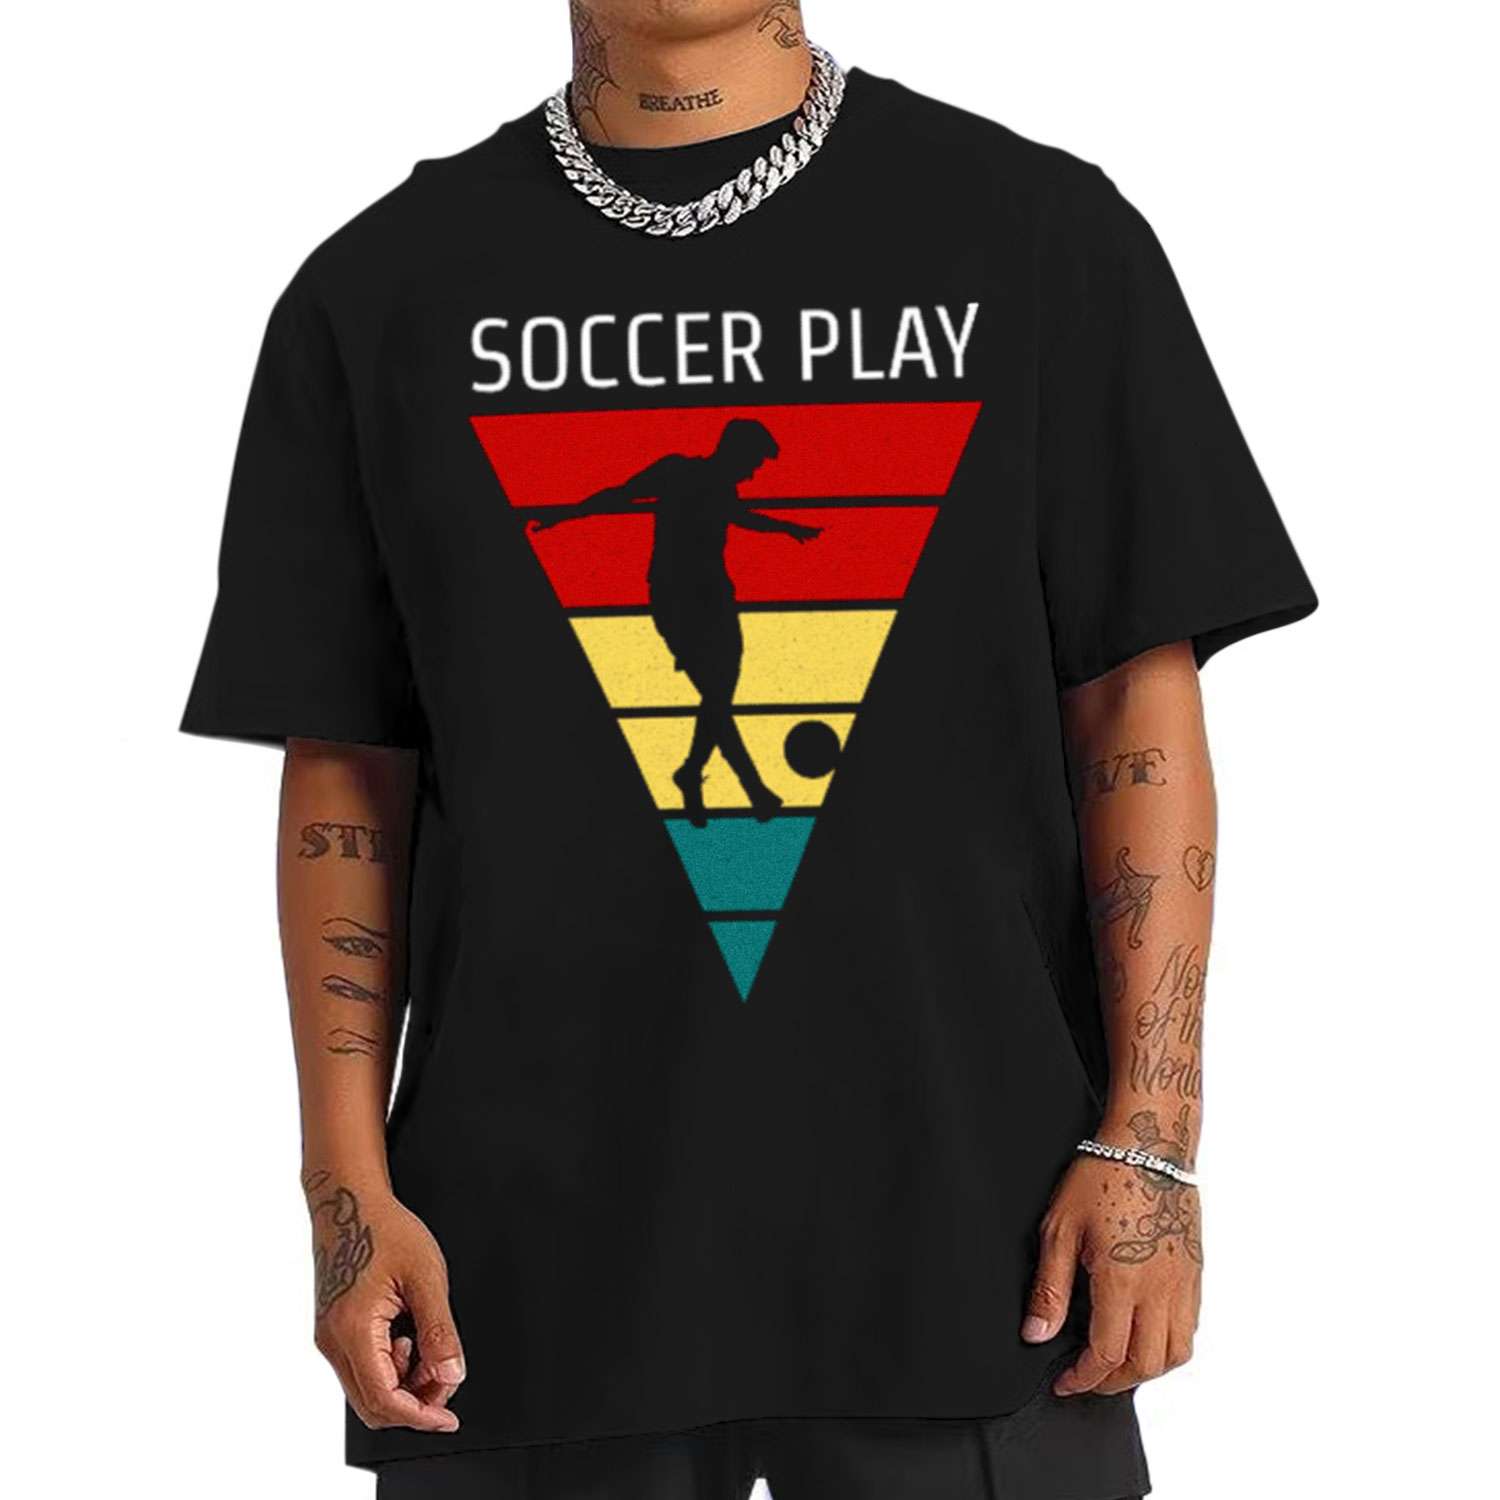 Soccer Play T-shirt